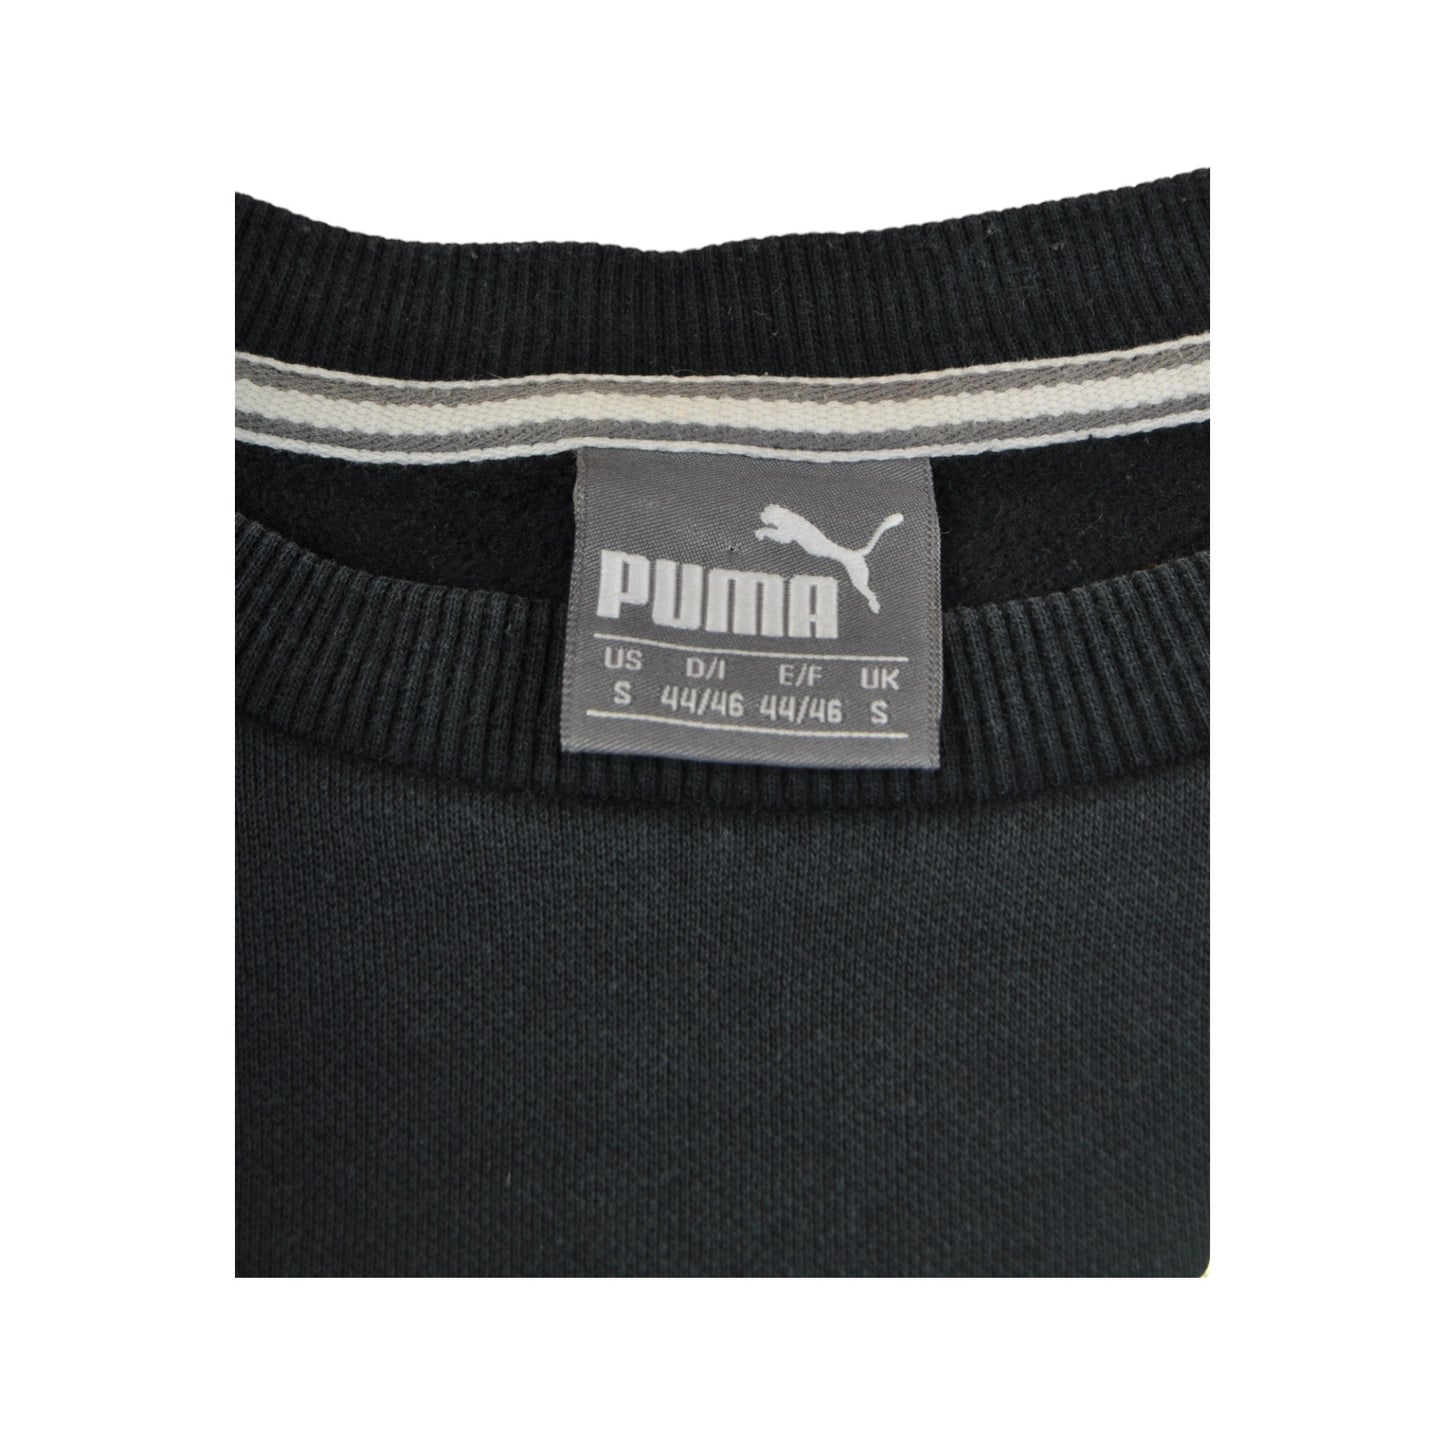 Vintage Puma Crew Neck Sweatshirt Black Ladies Small